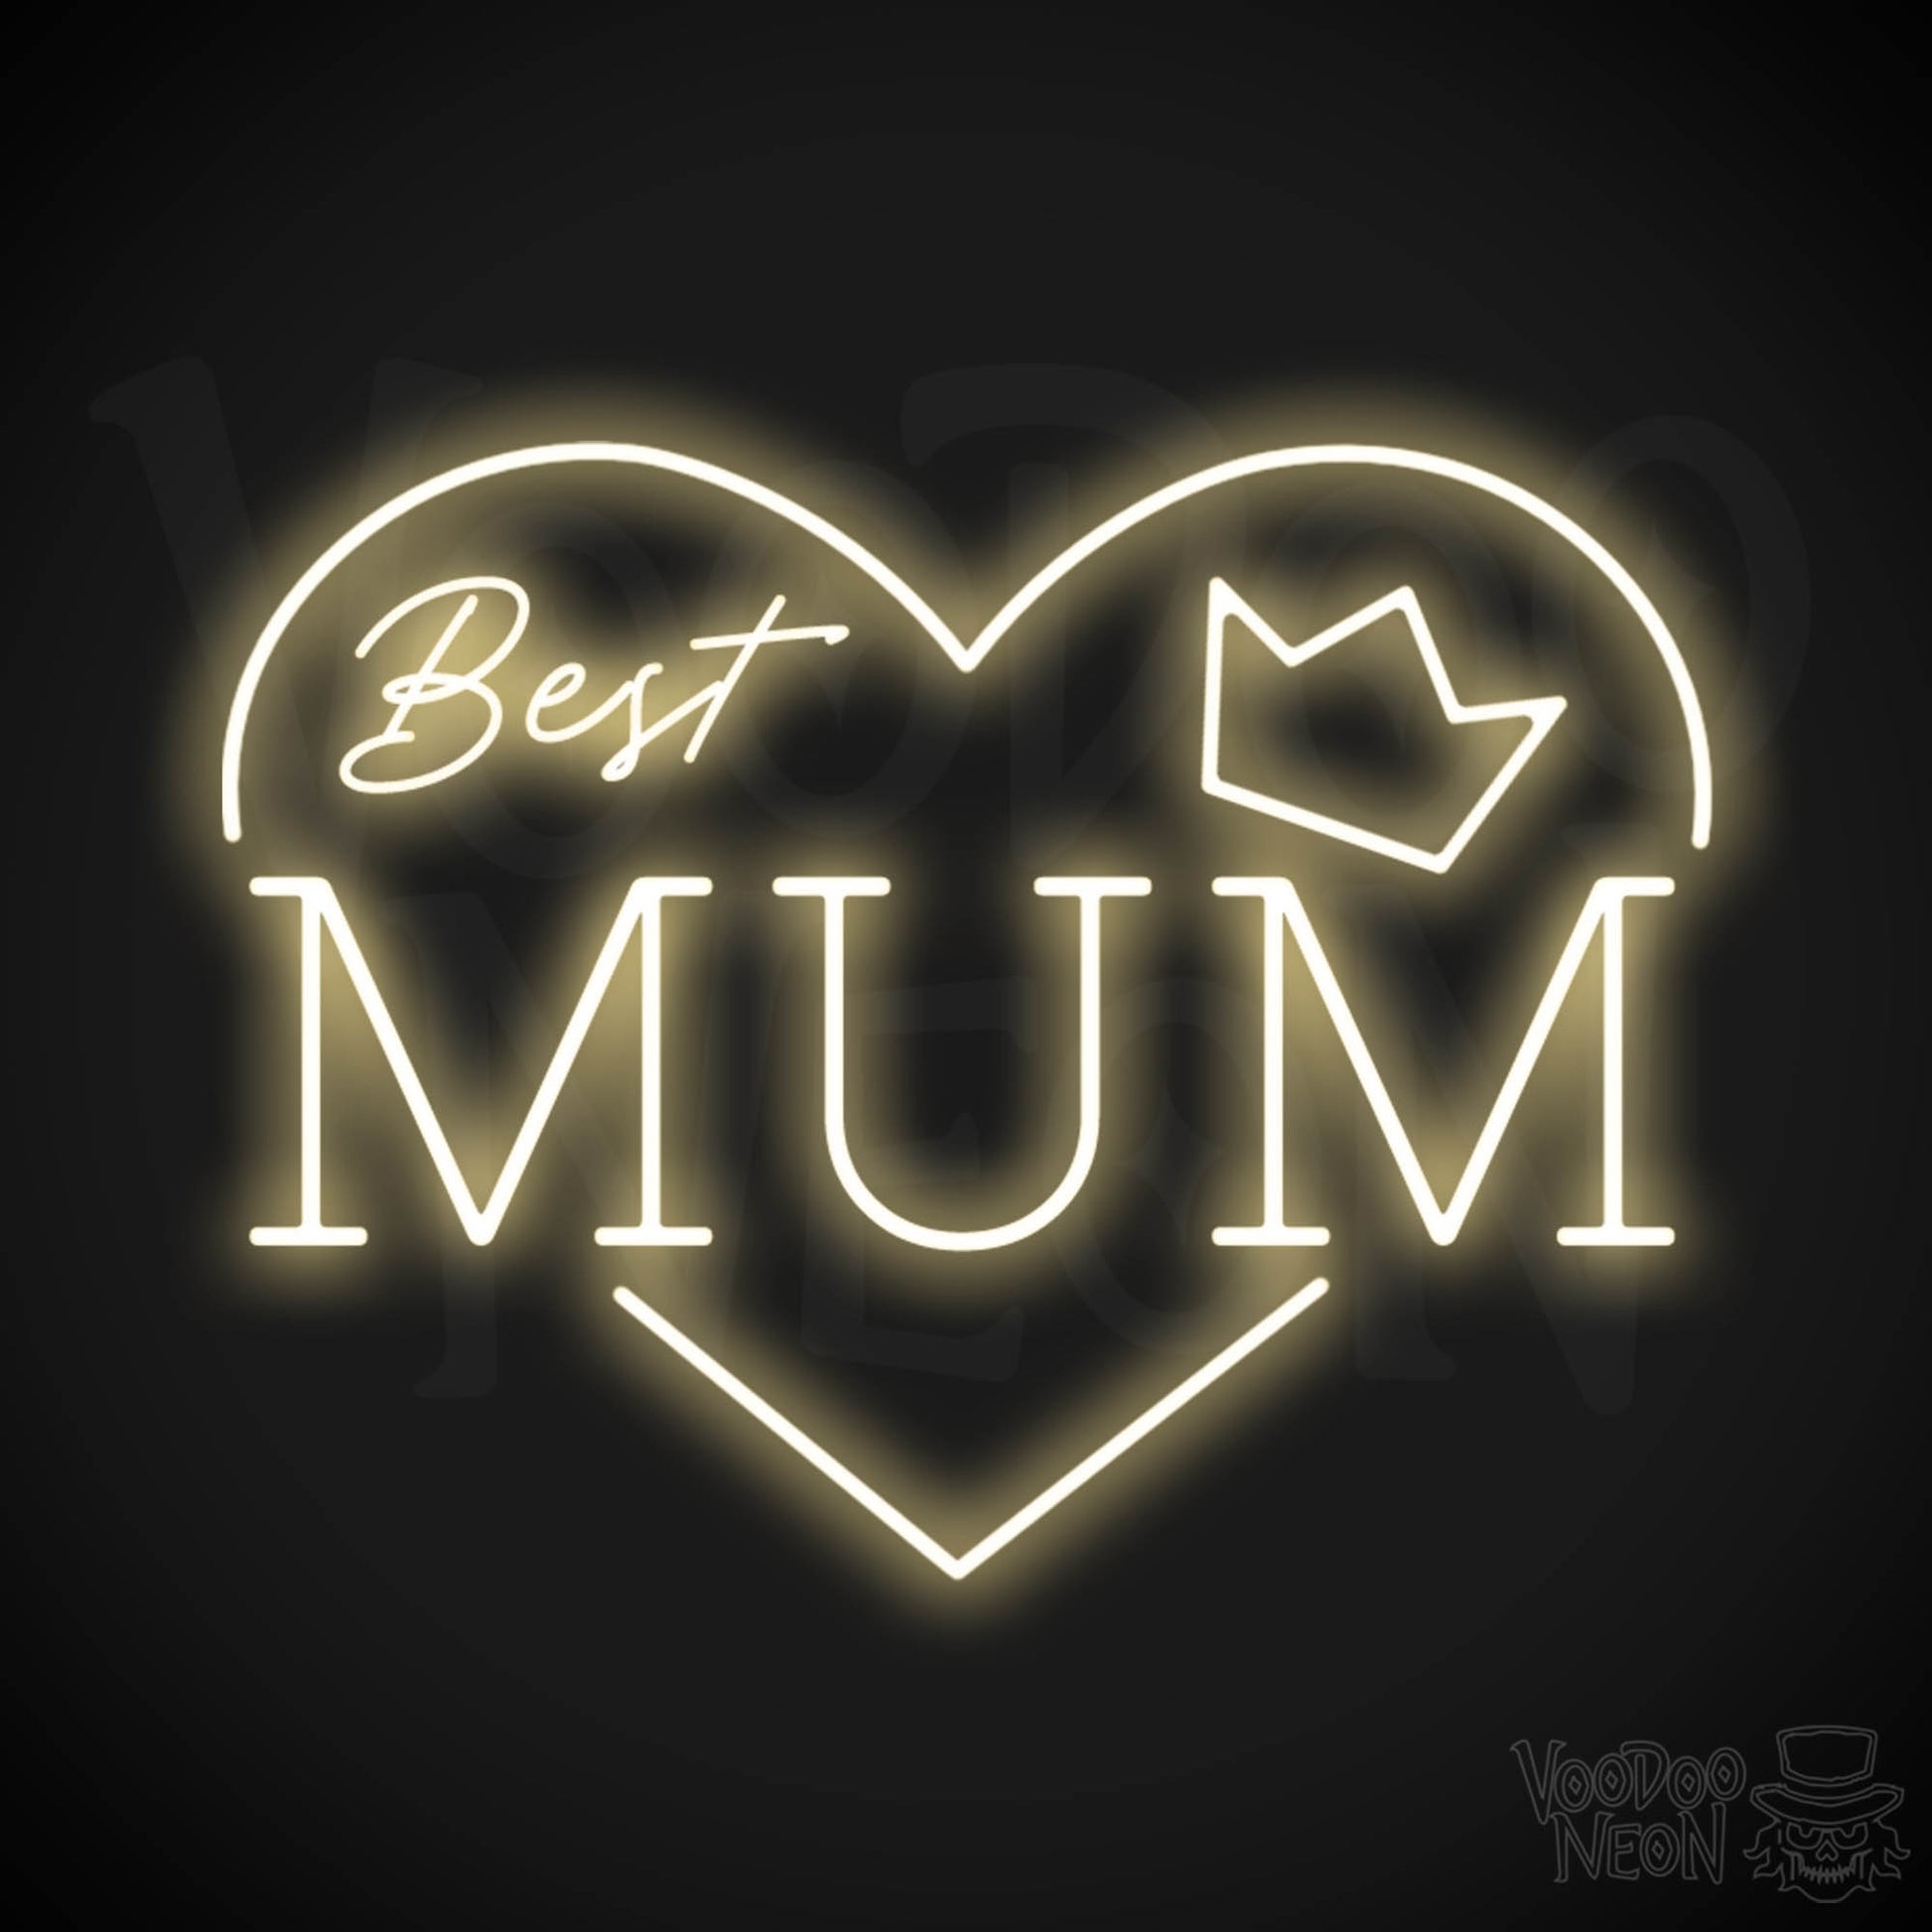 Best Mum Neon Sign - Neon Best Mum Sign - Wall Art - Color Warm White